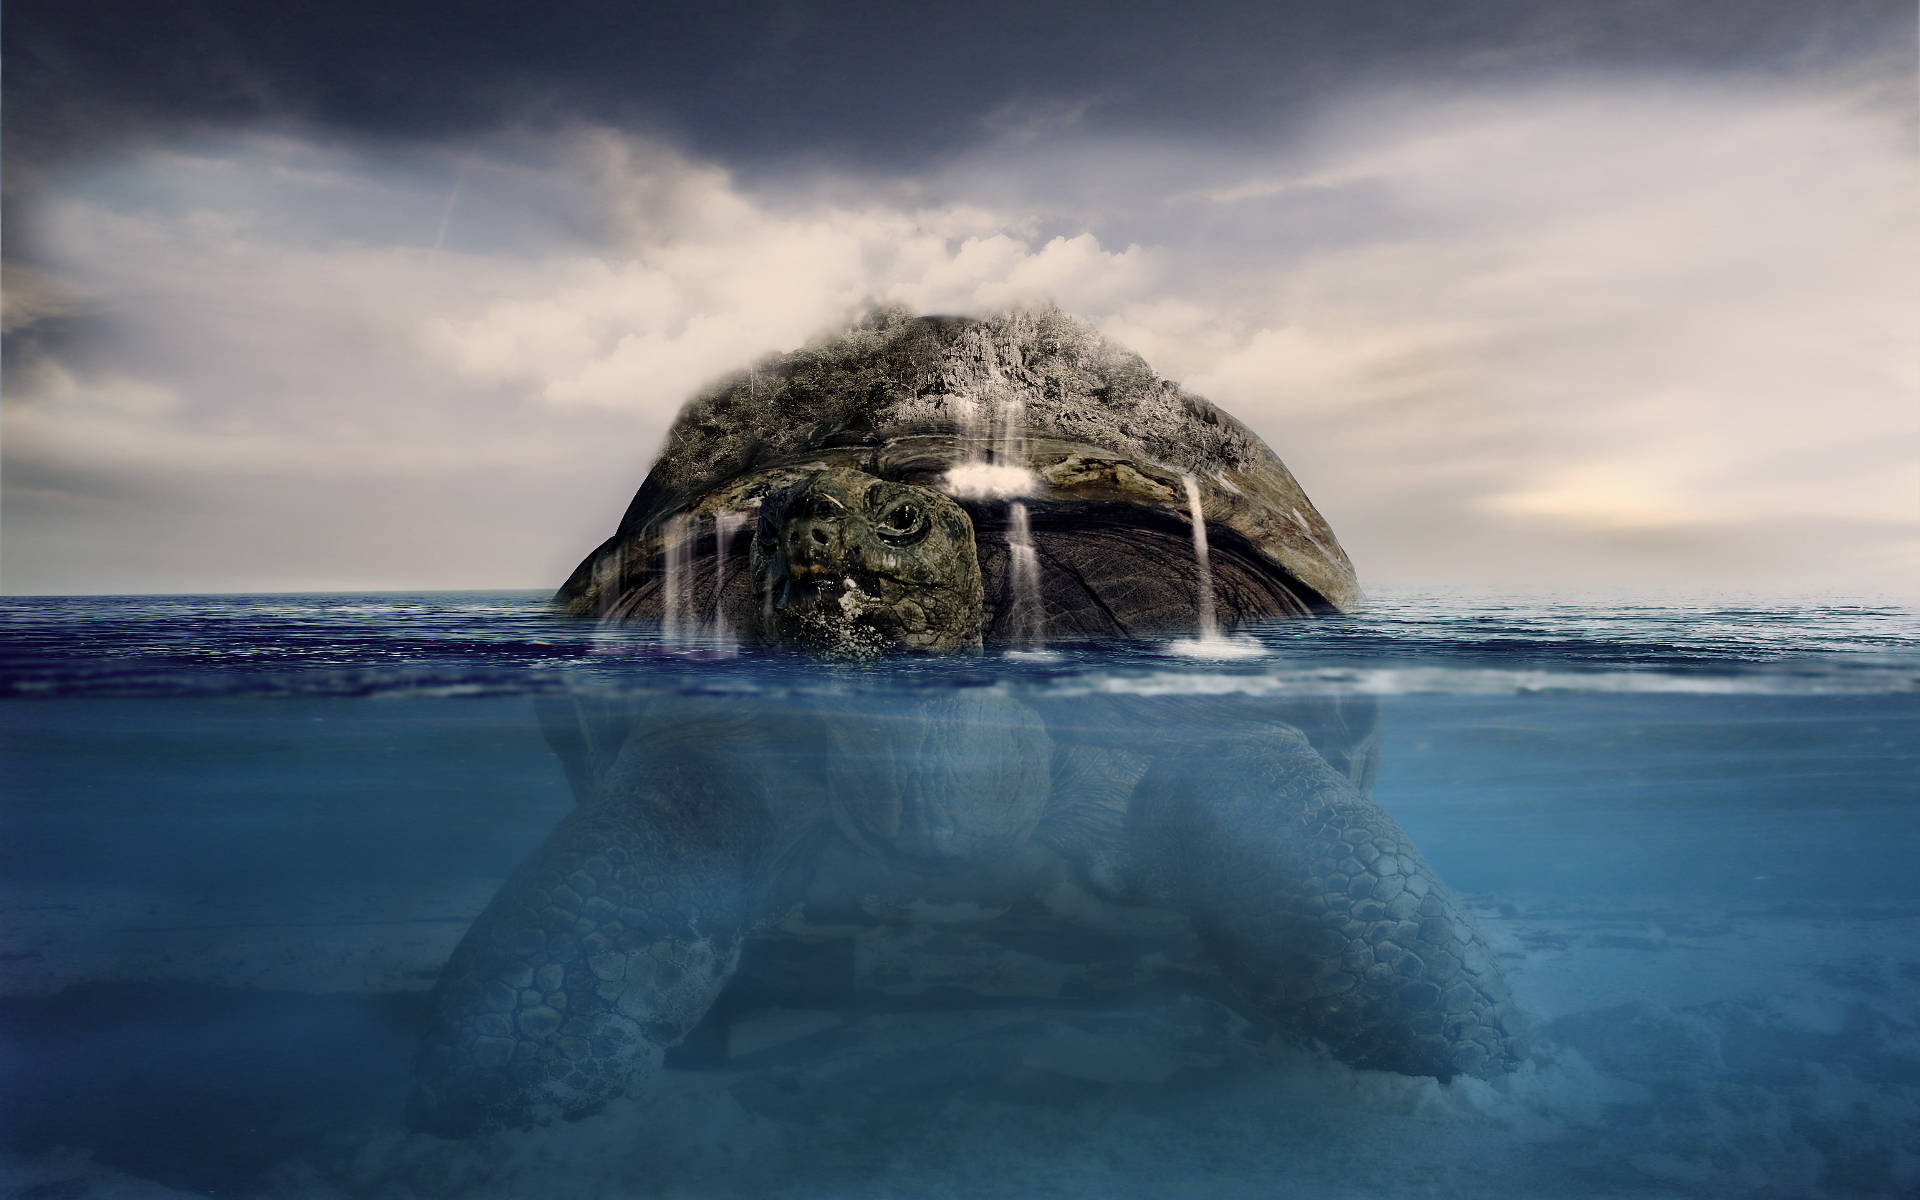 Gigantescatartaruga Legal No Mar. Papel de Parede